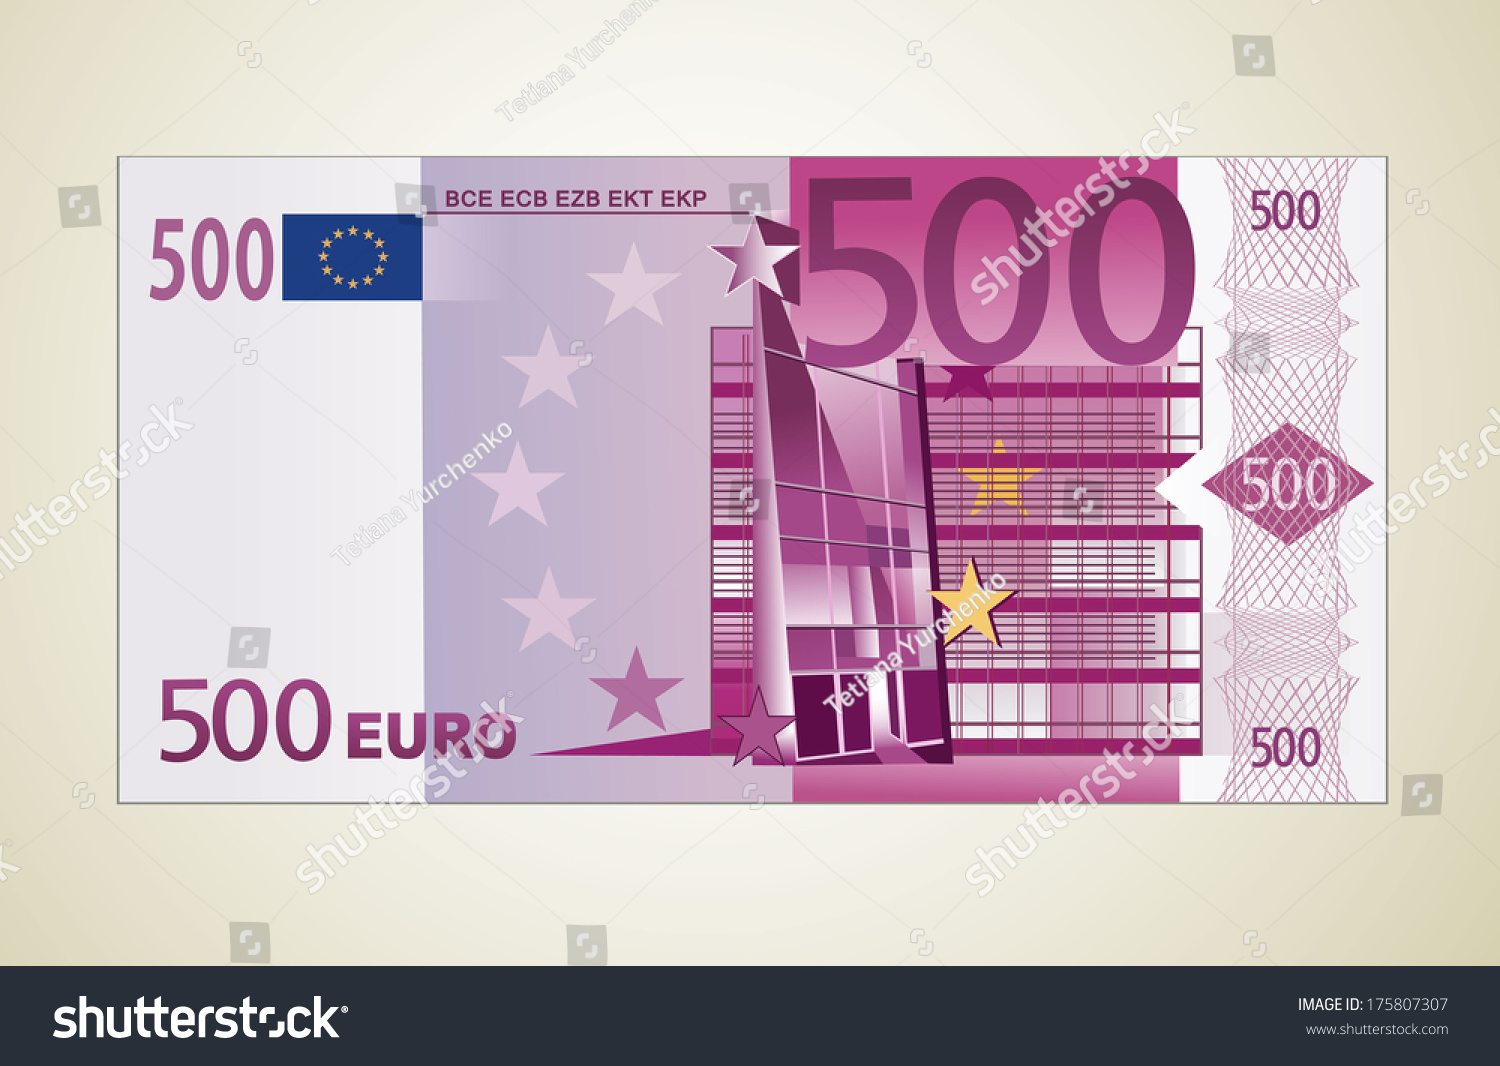 Банкноты евро 500